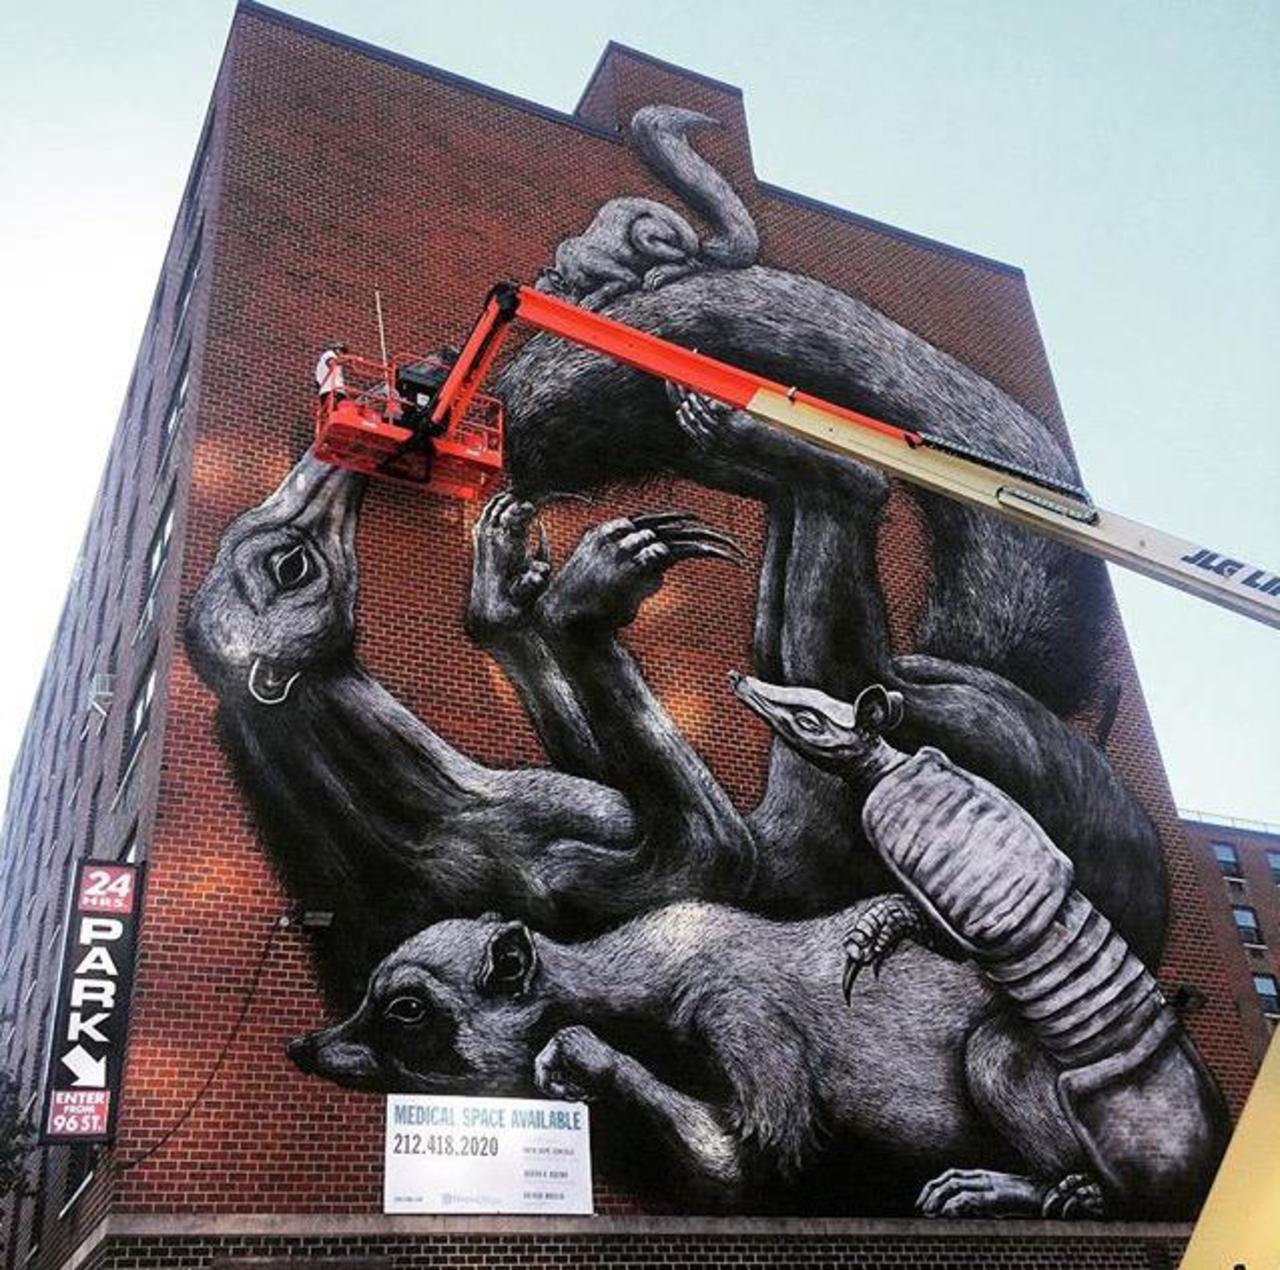 Street Art in progress by ROA in NYC

#art #graffiti #mural #streetart http://t.co/QjZlq9MO14